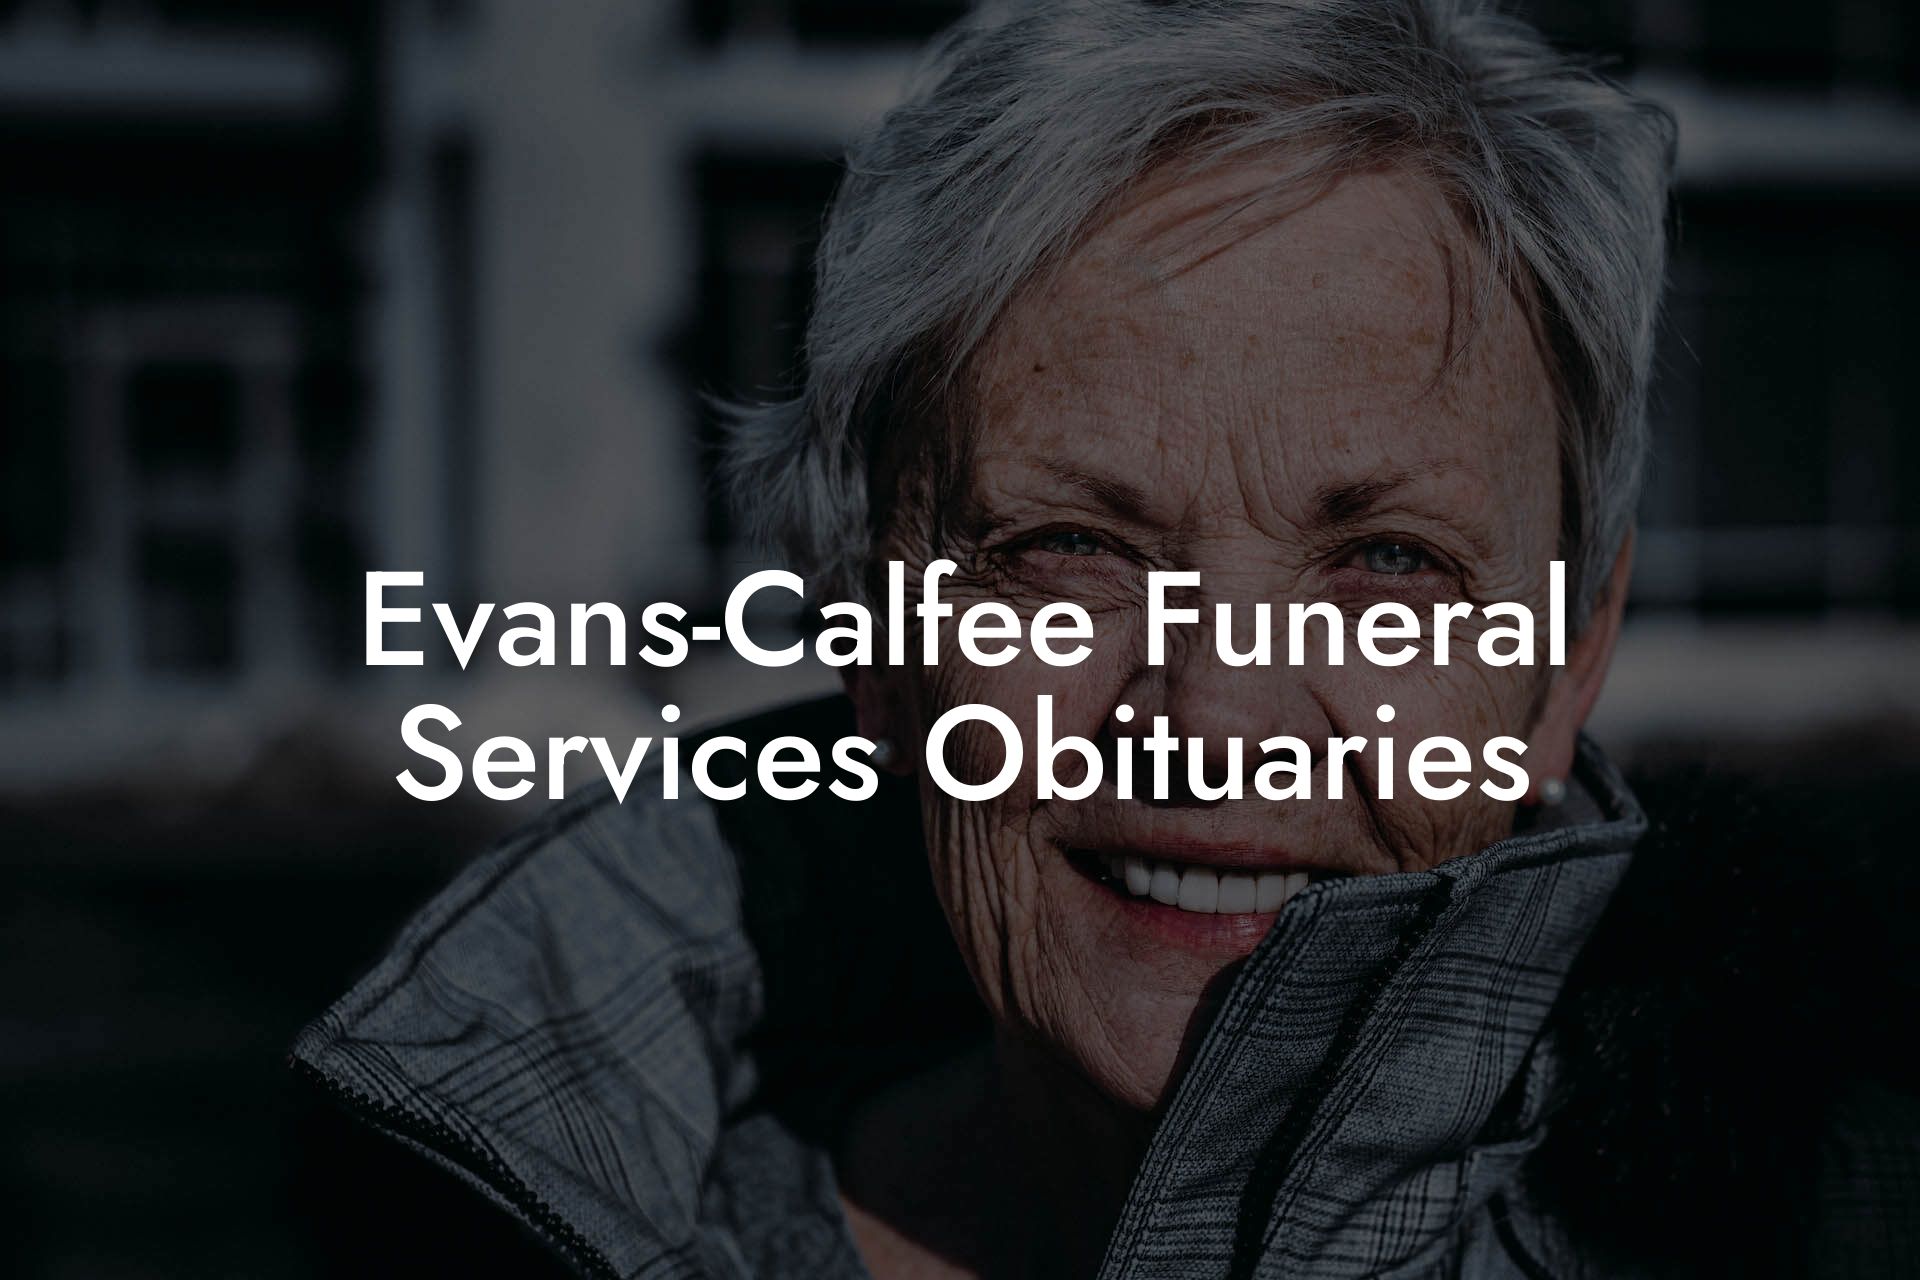 Evans-Calfee Funeral Services Obituaries